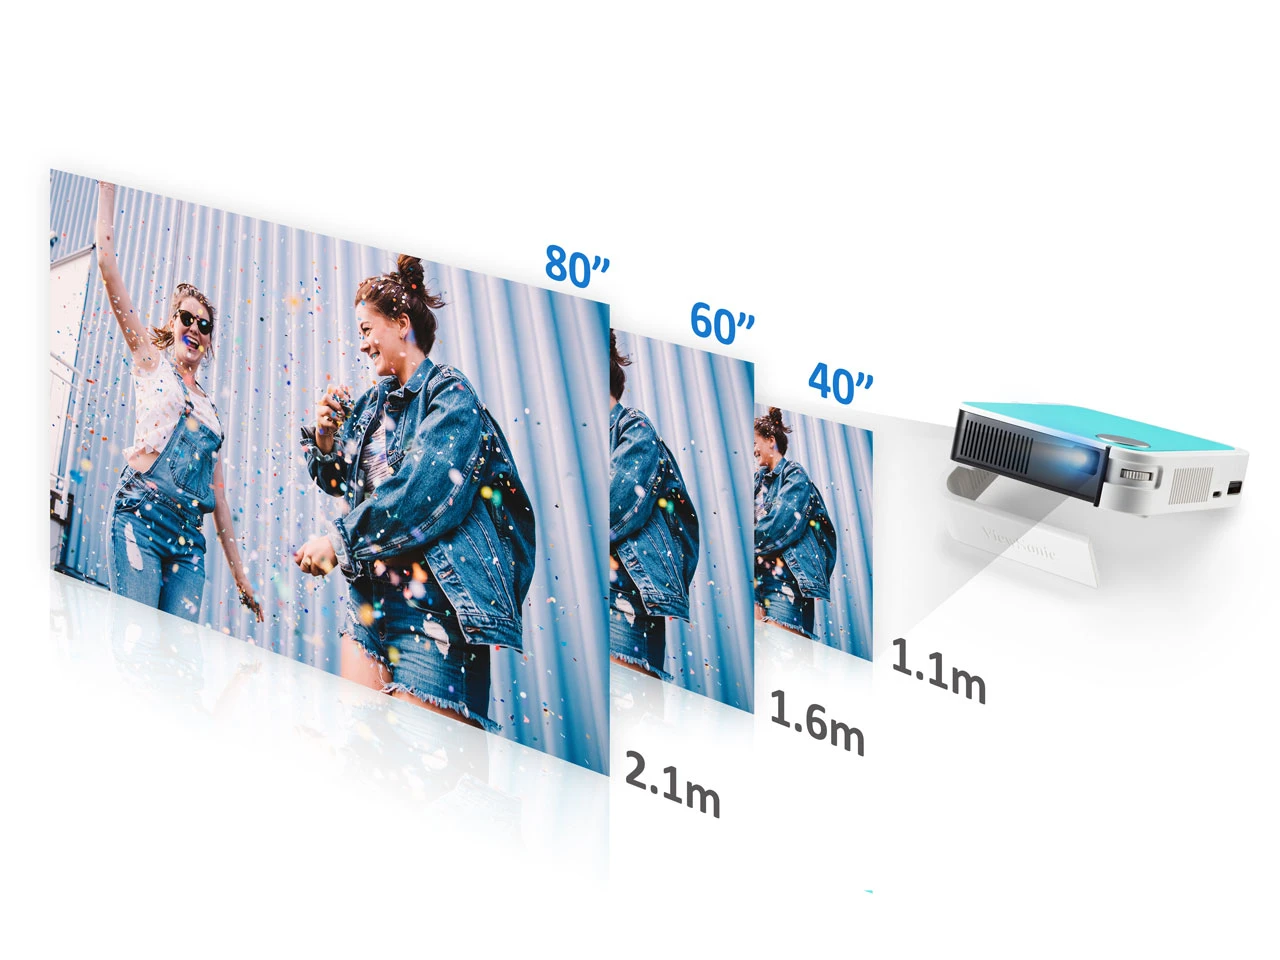 ViewSonic M1 mini LED Pocket Cinema with JBL Speaker - ViewSonic Global